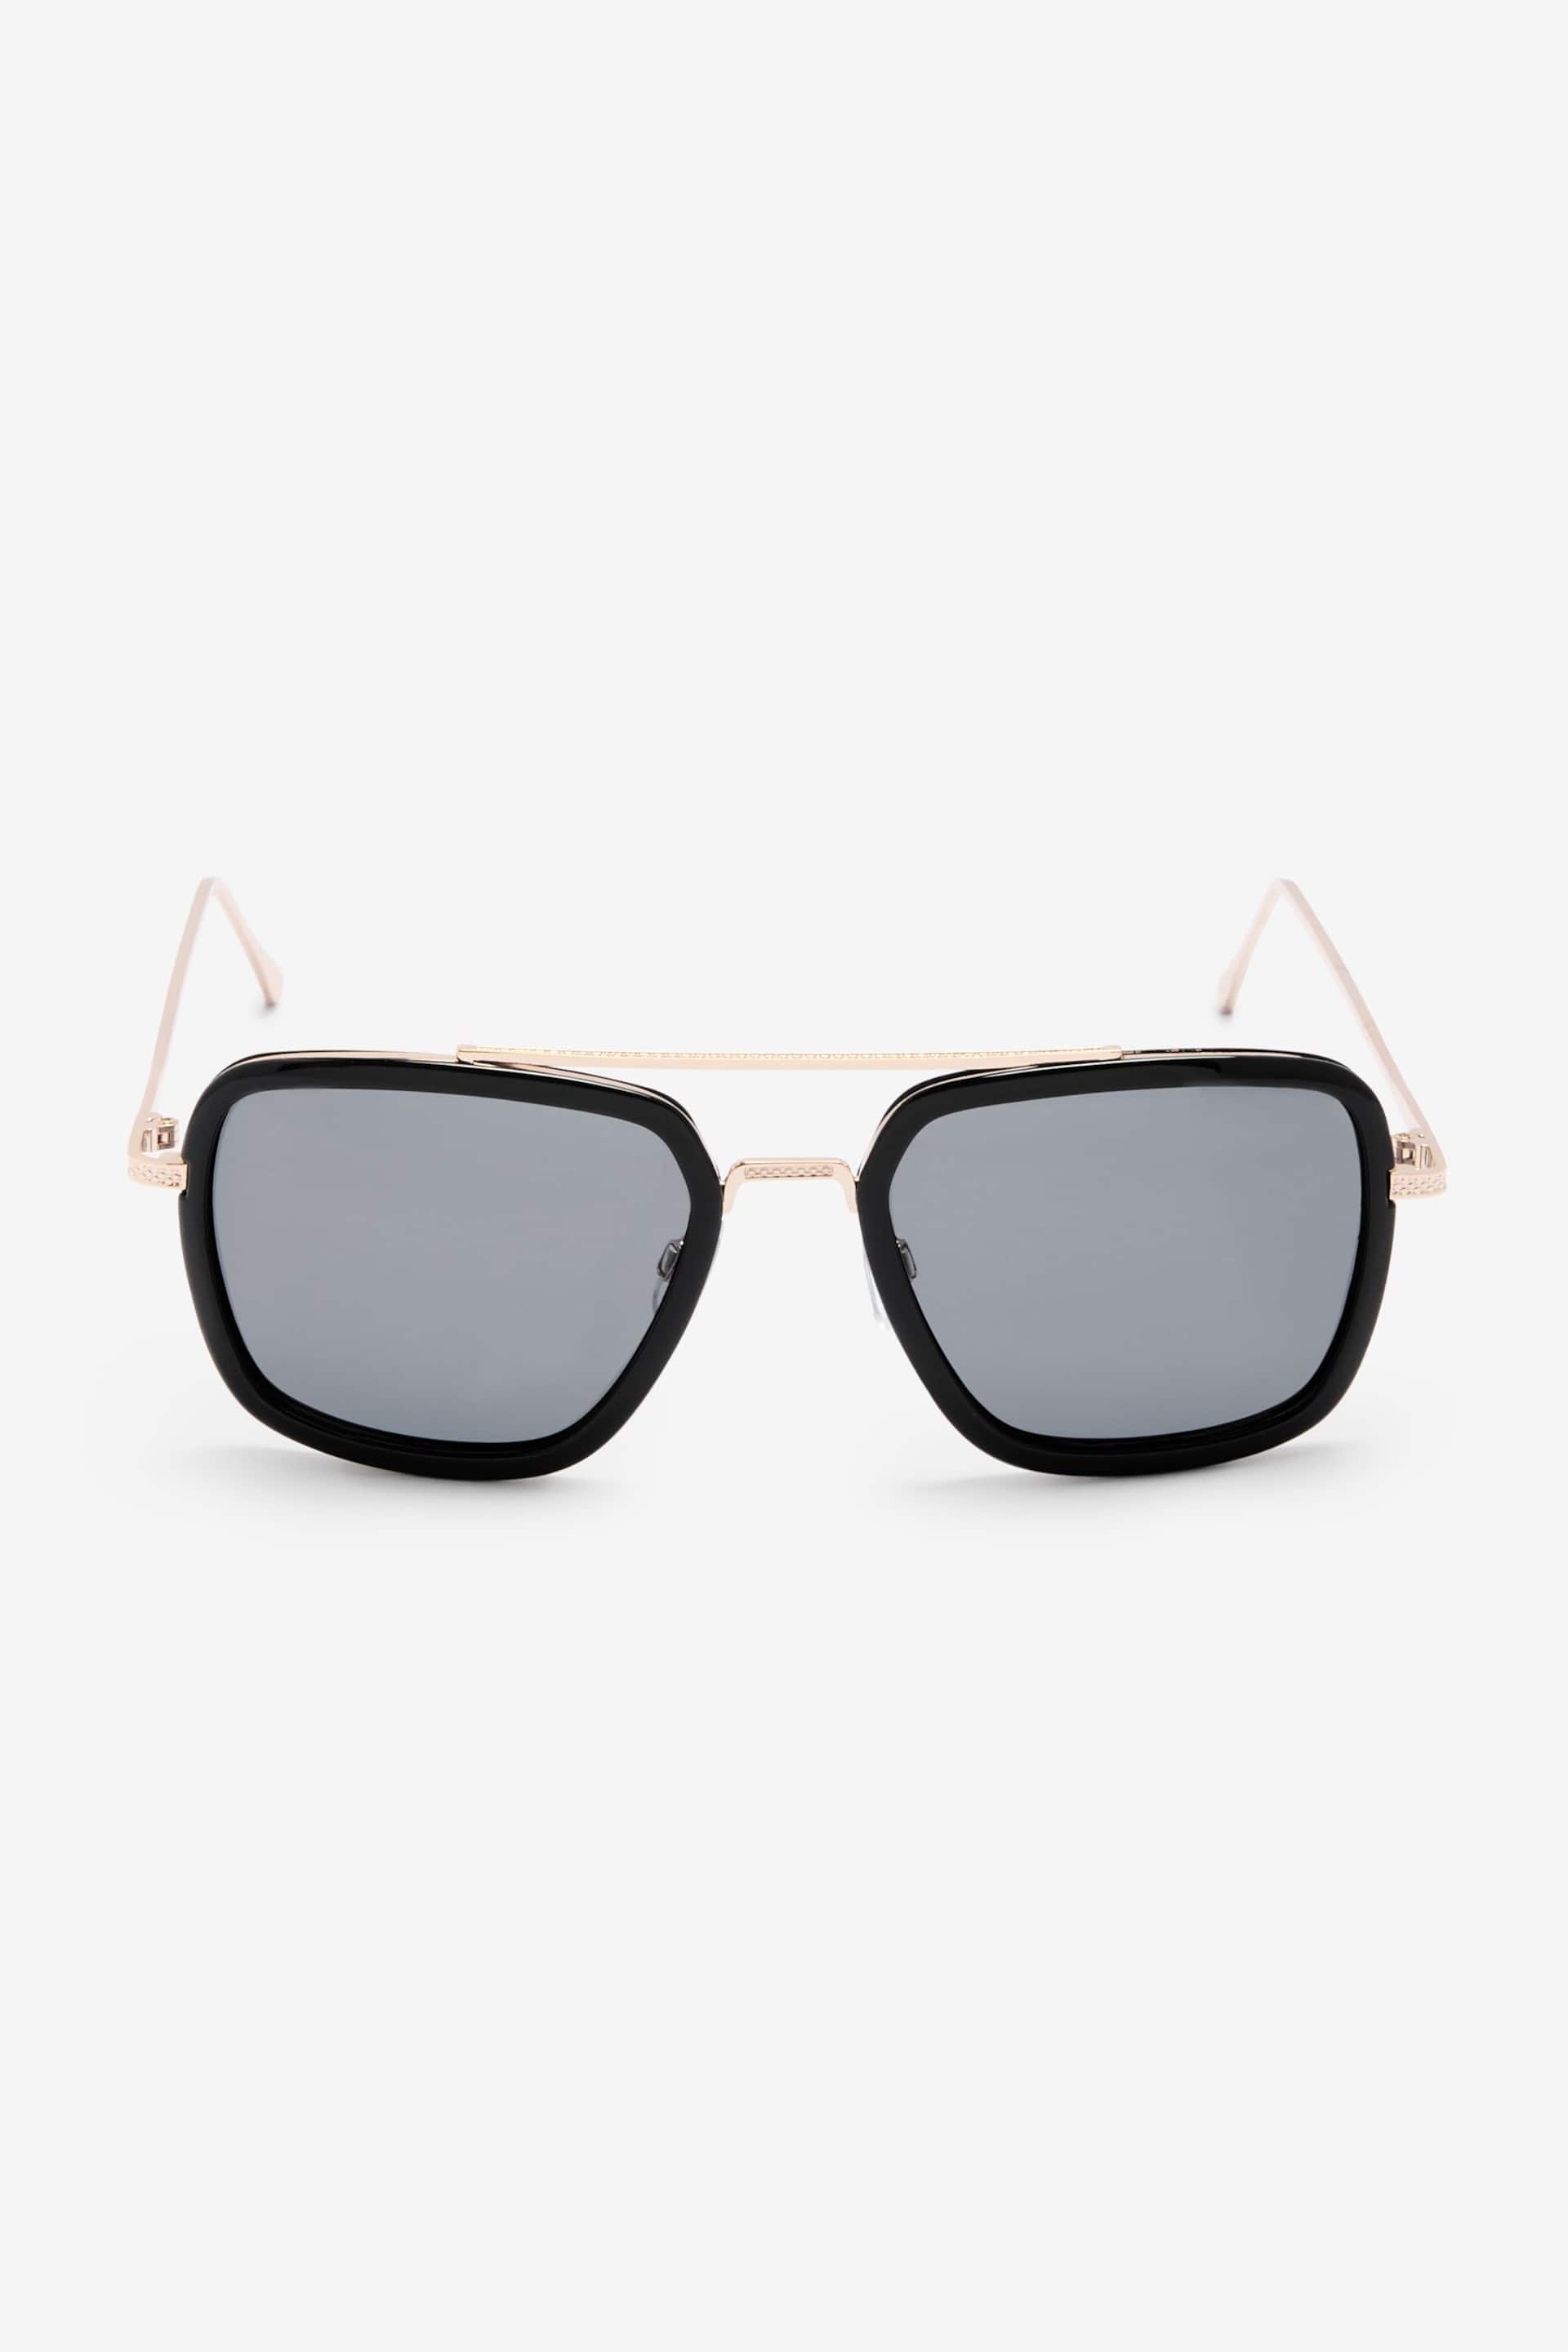 Black/Gold Navigator Polarised Sunglasses - Image 3 of 4